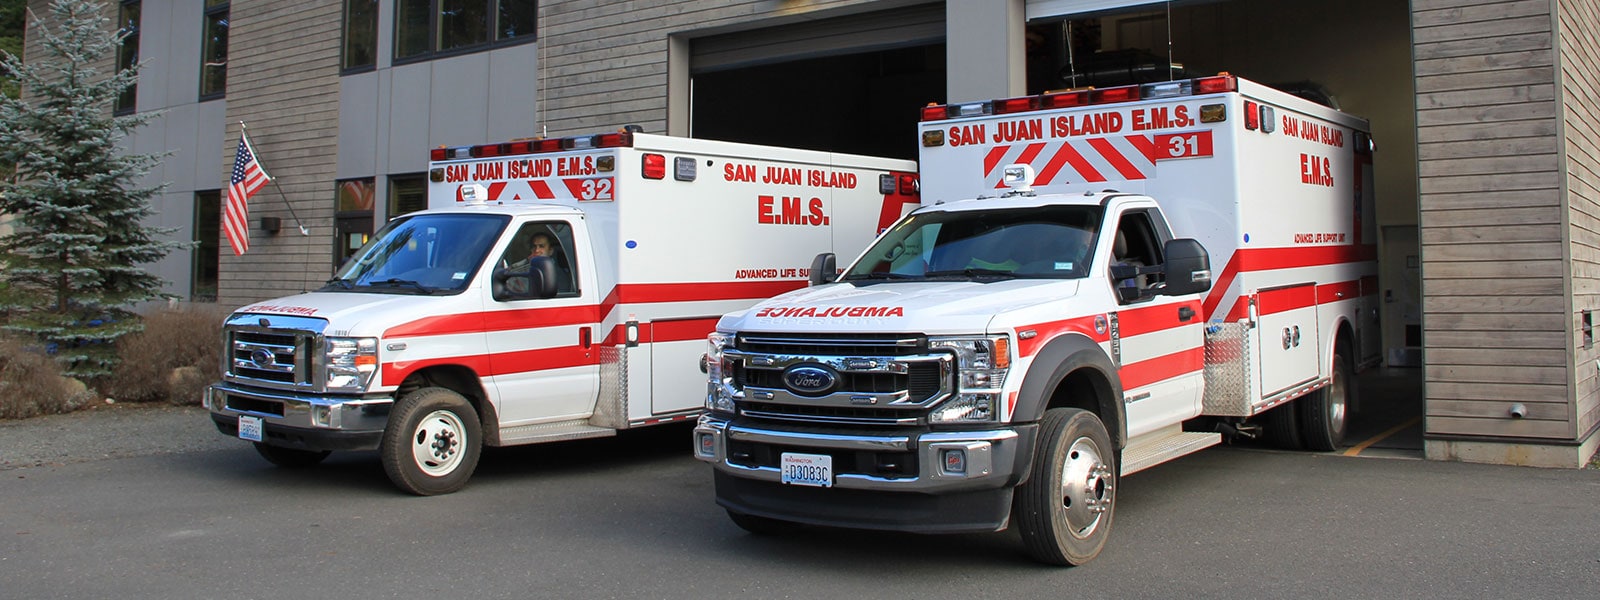 San Juan EMS Ambulances Leaving Garage